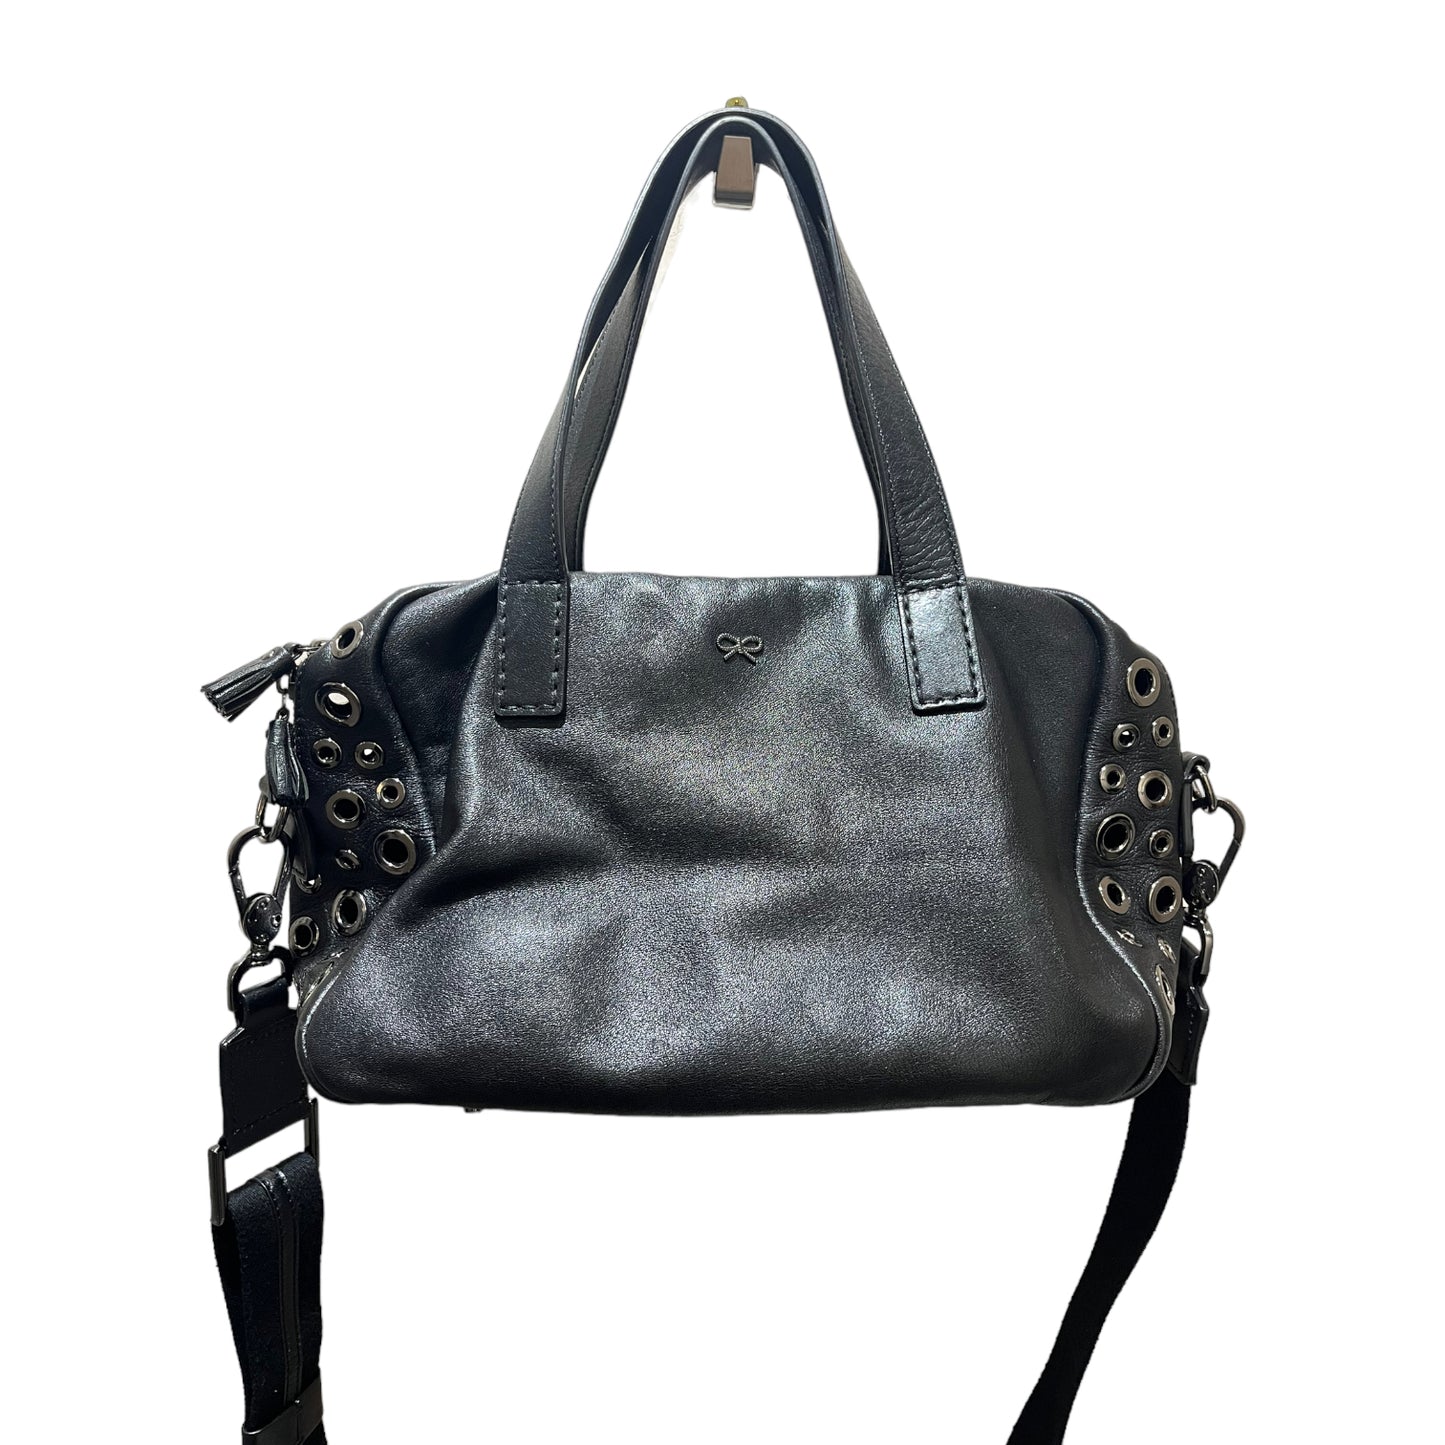 Anya Hindmarch Black Special Edition Bag